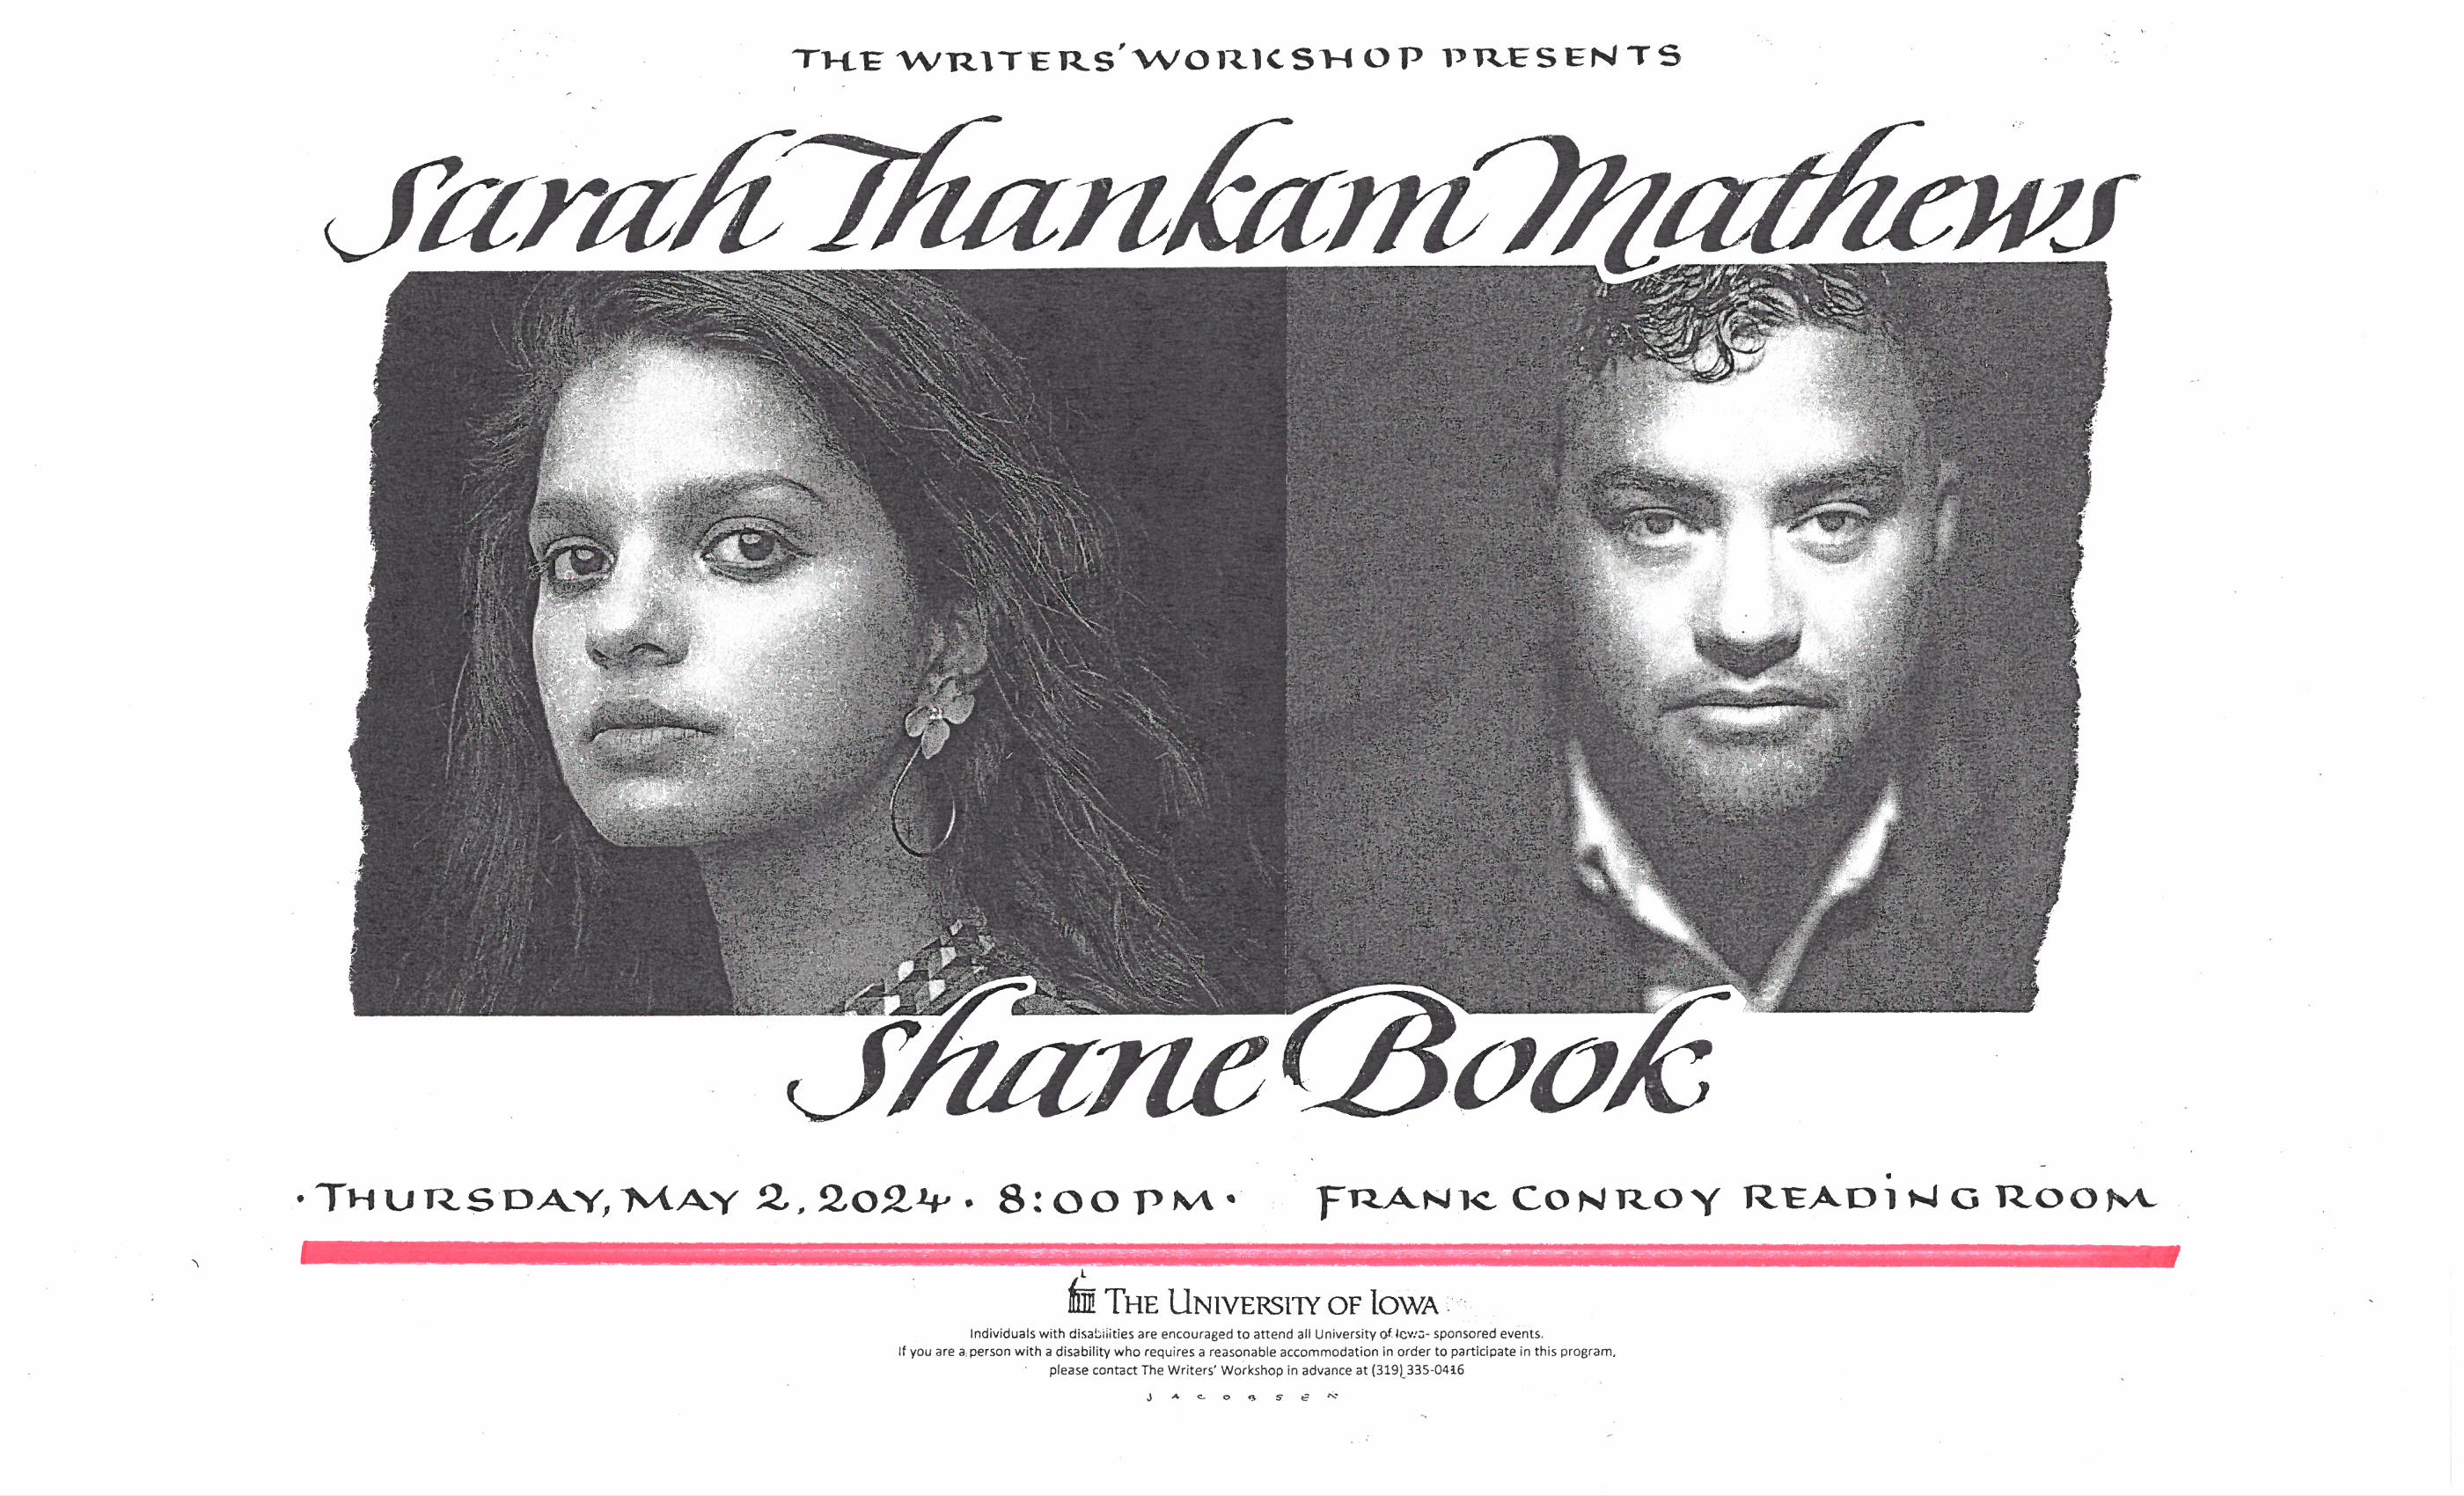 Sarah Thankam Mathews and Shane Book poster